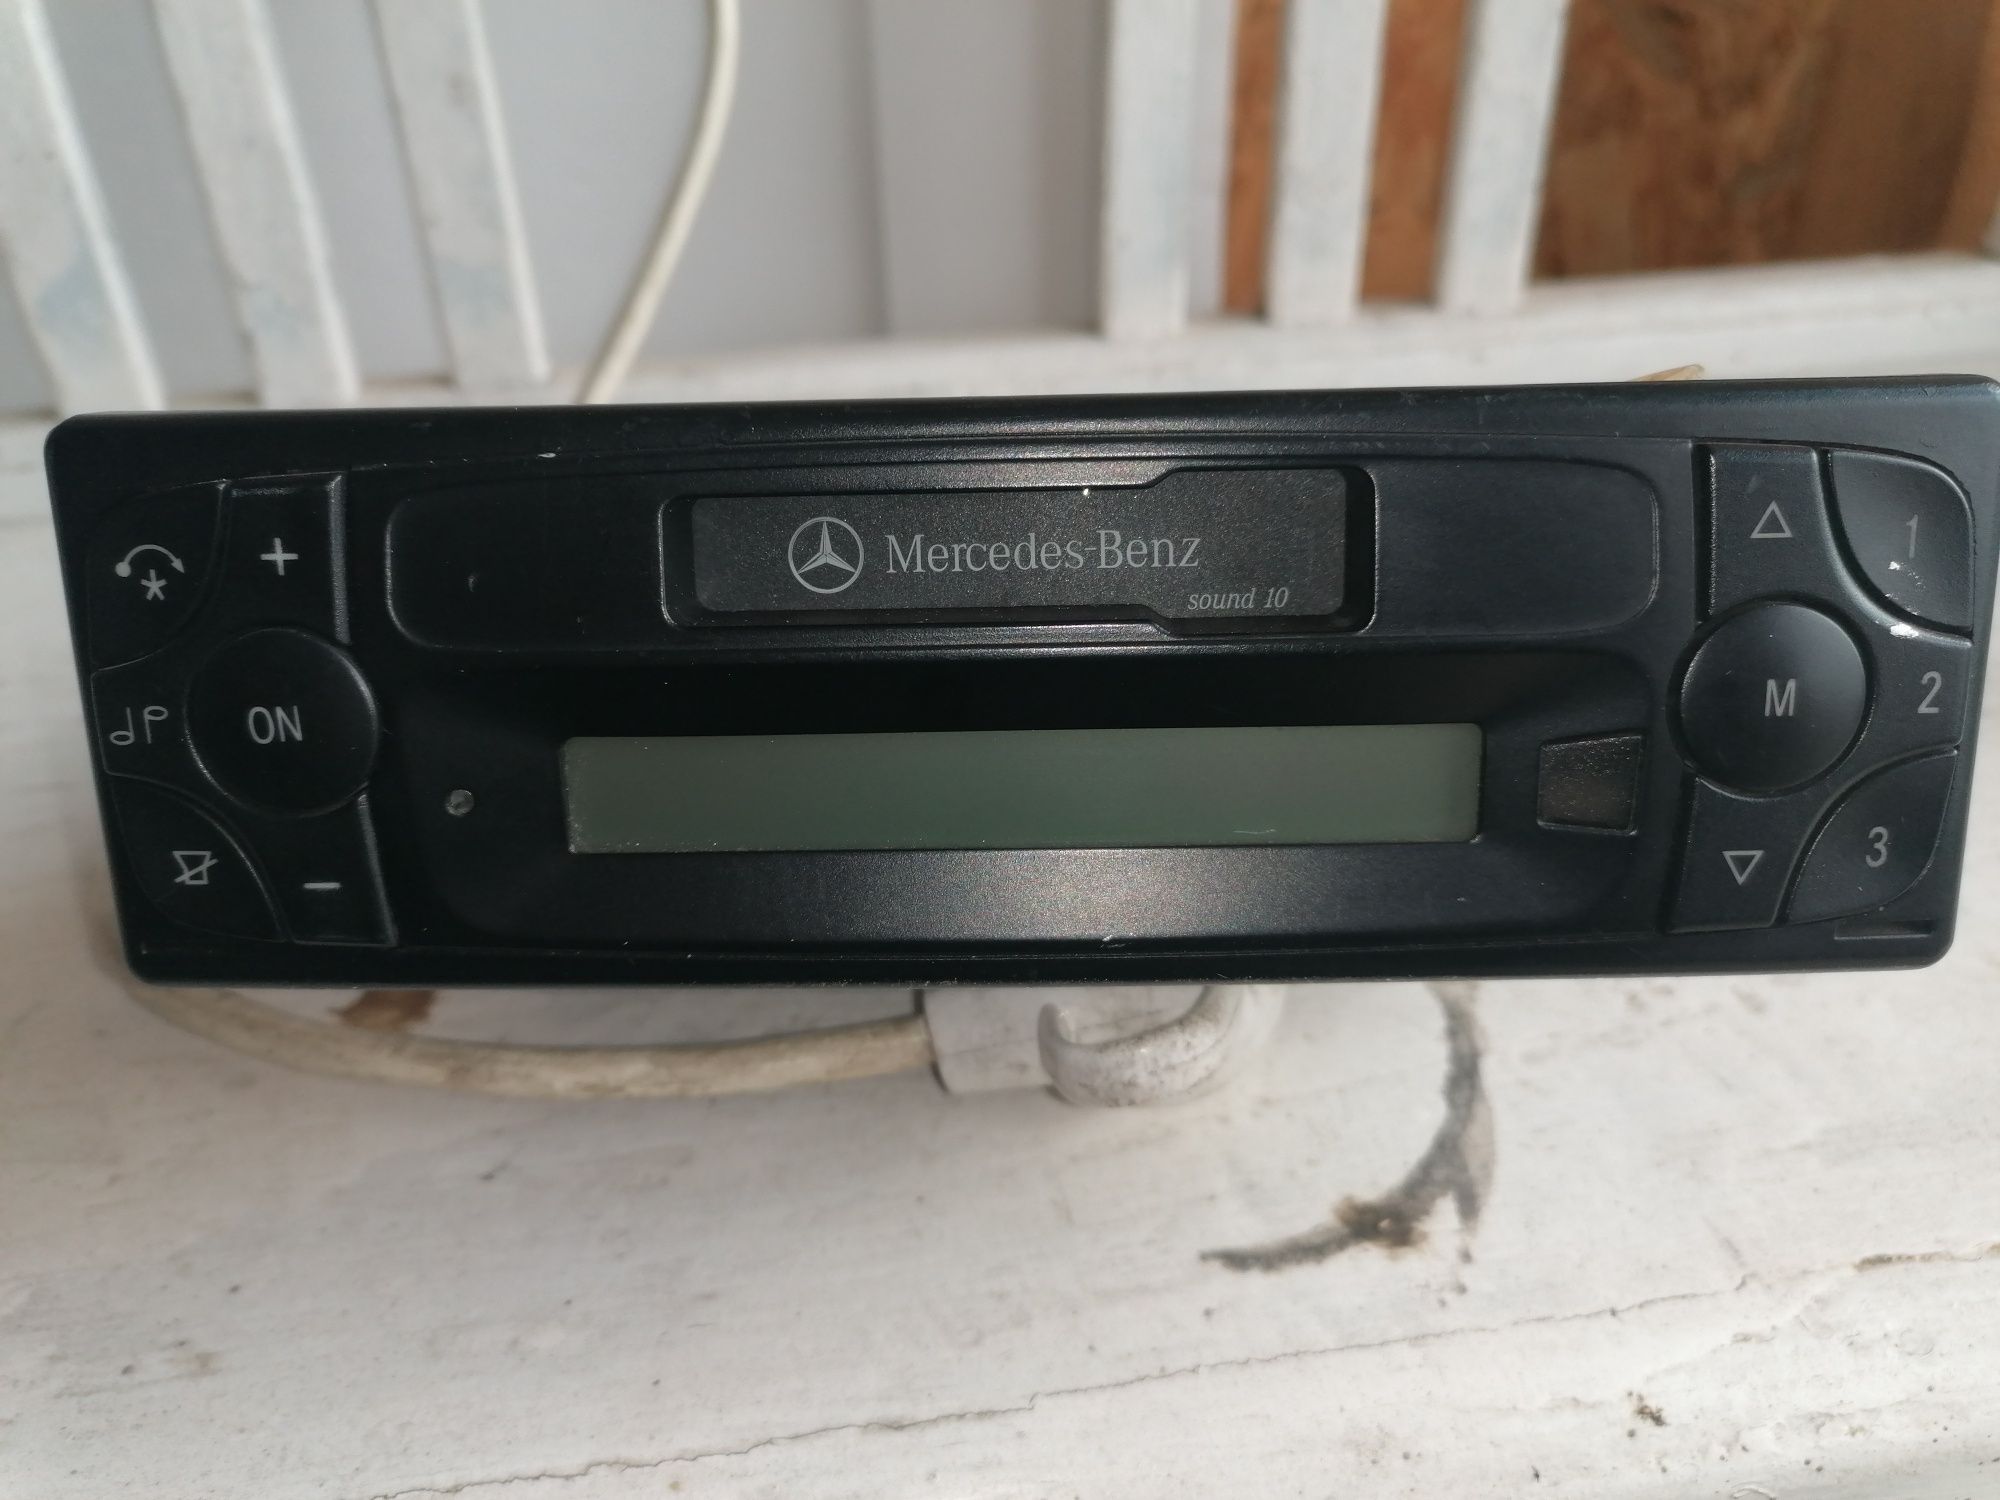 Radio casetofon Mercedes sound10